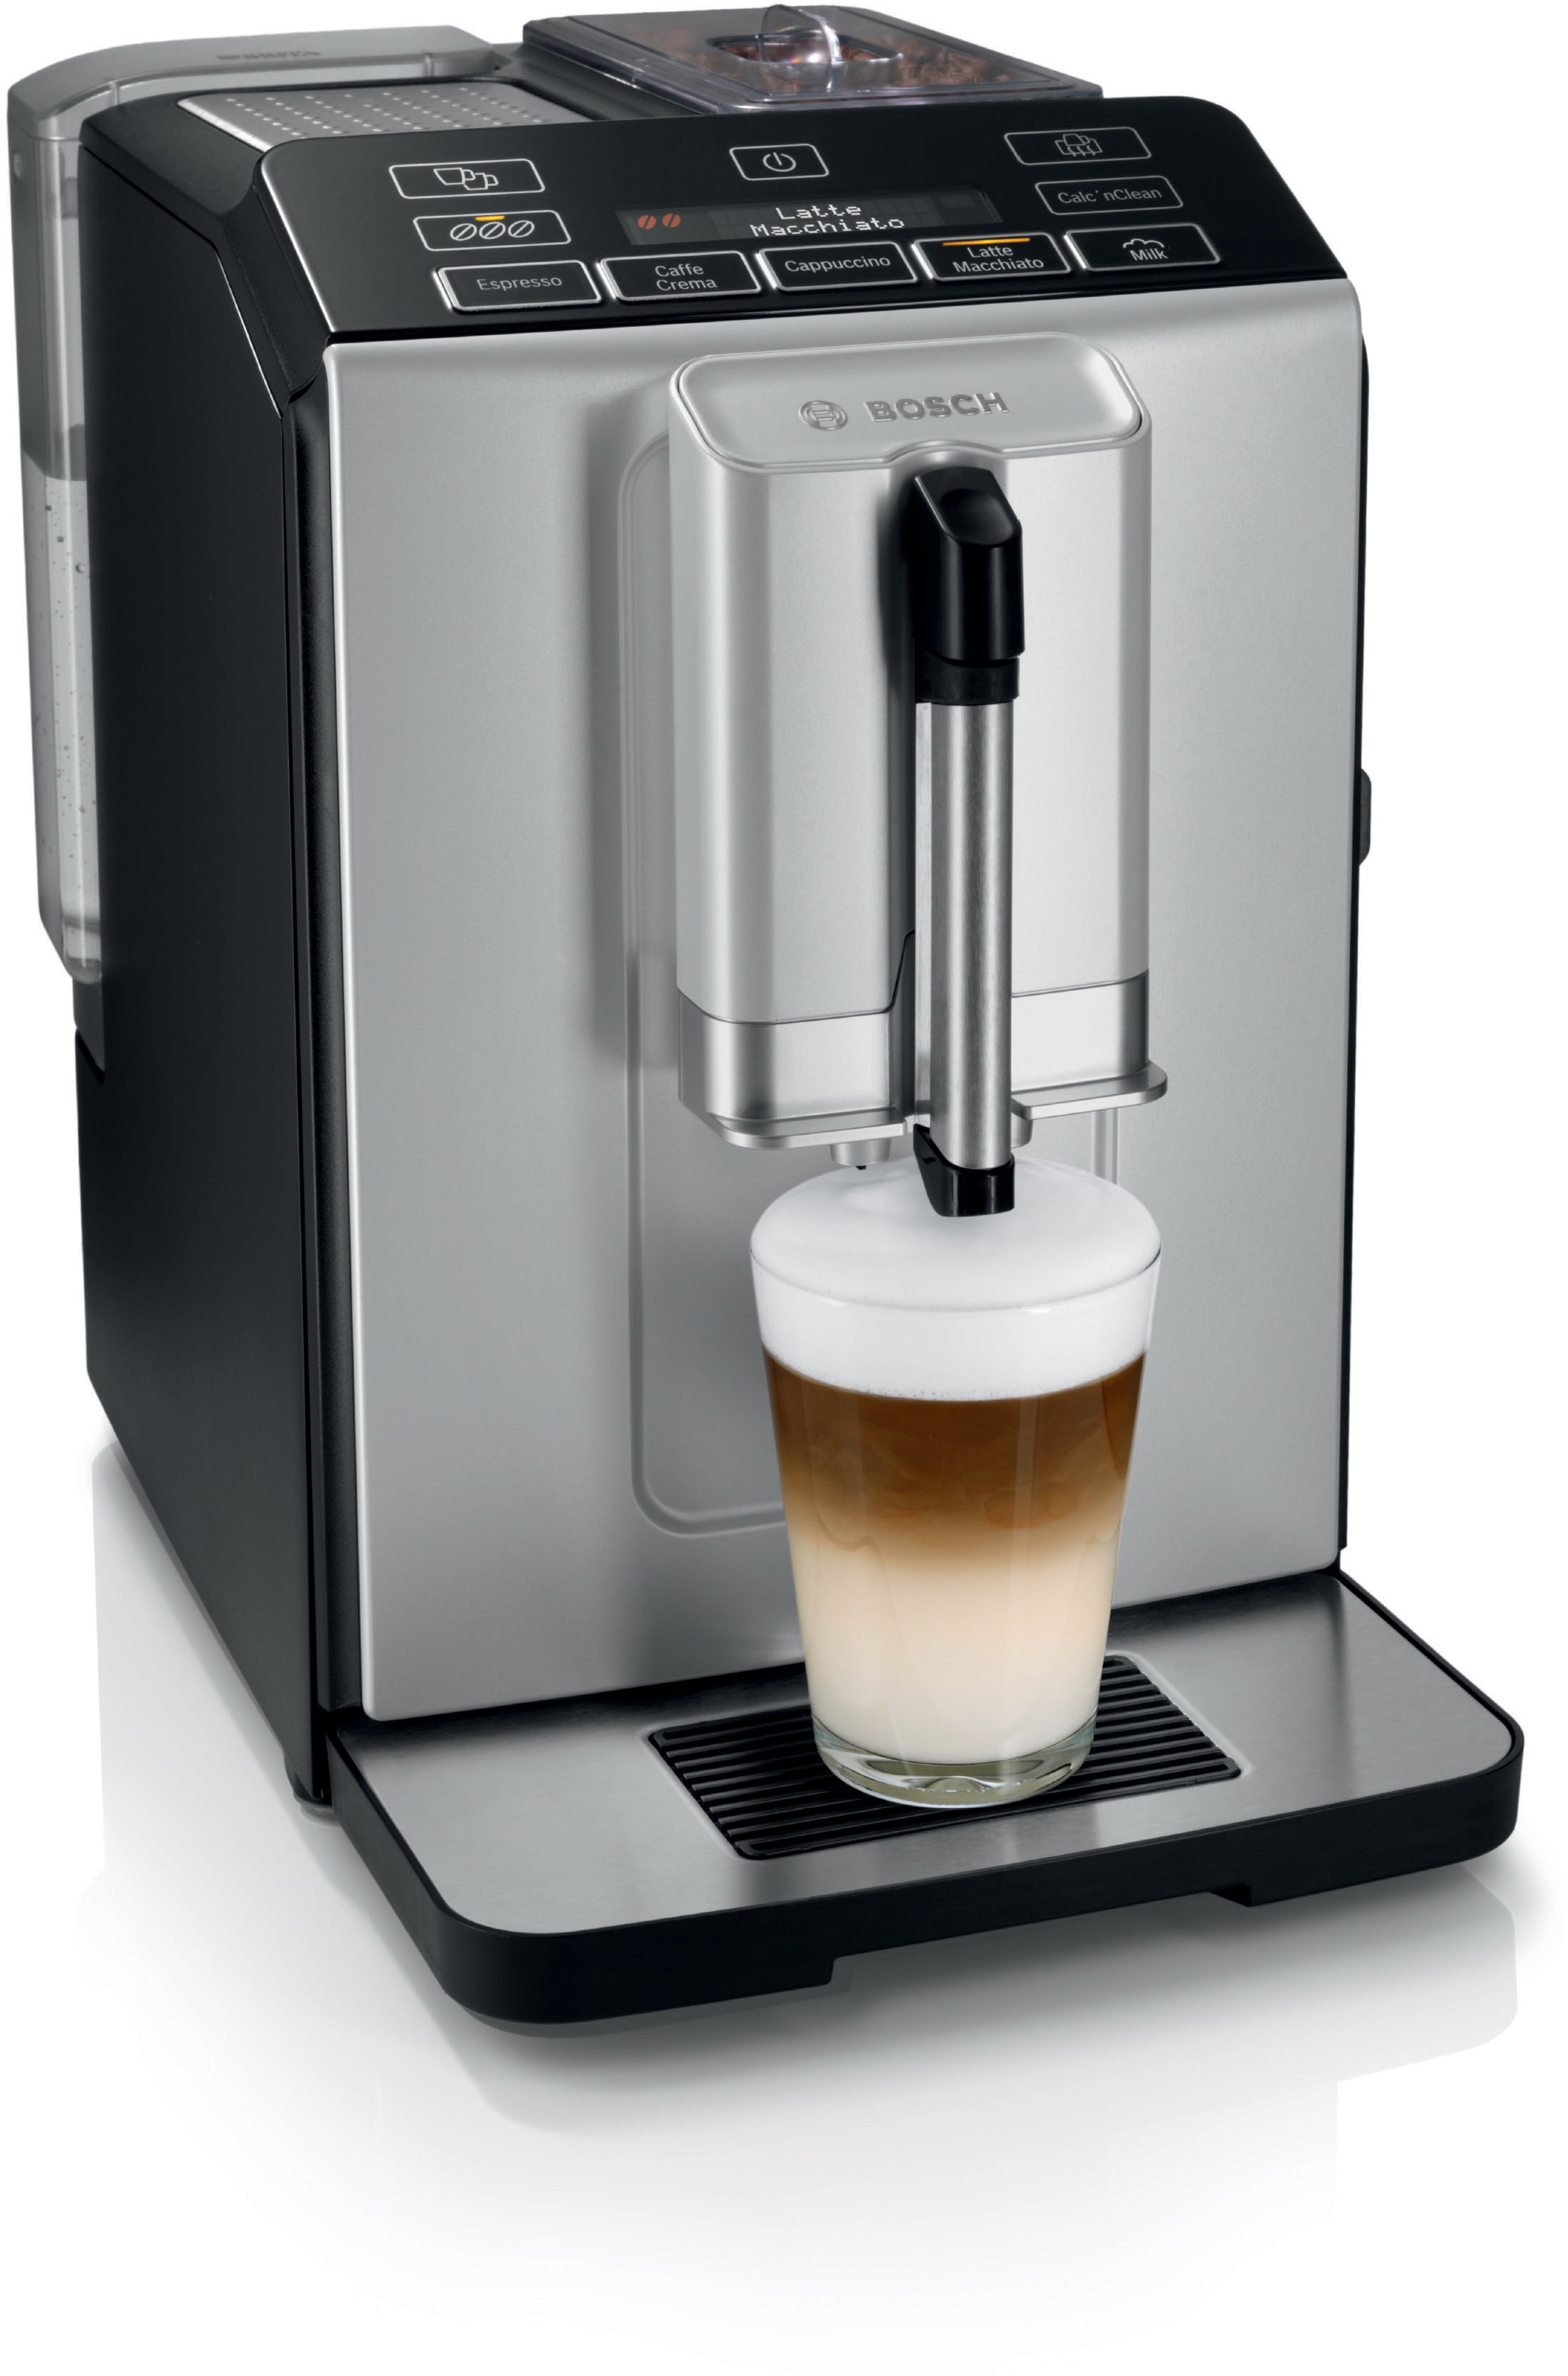 Aparat za kafu TIS30321RW Potpuno automatizovan, Verocup 300, 1300 W